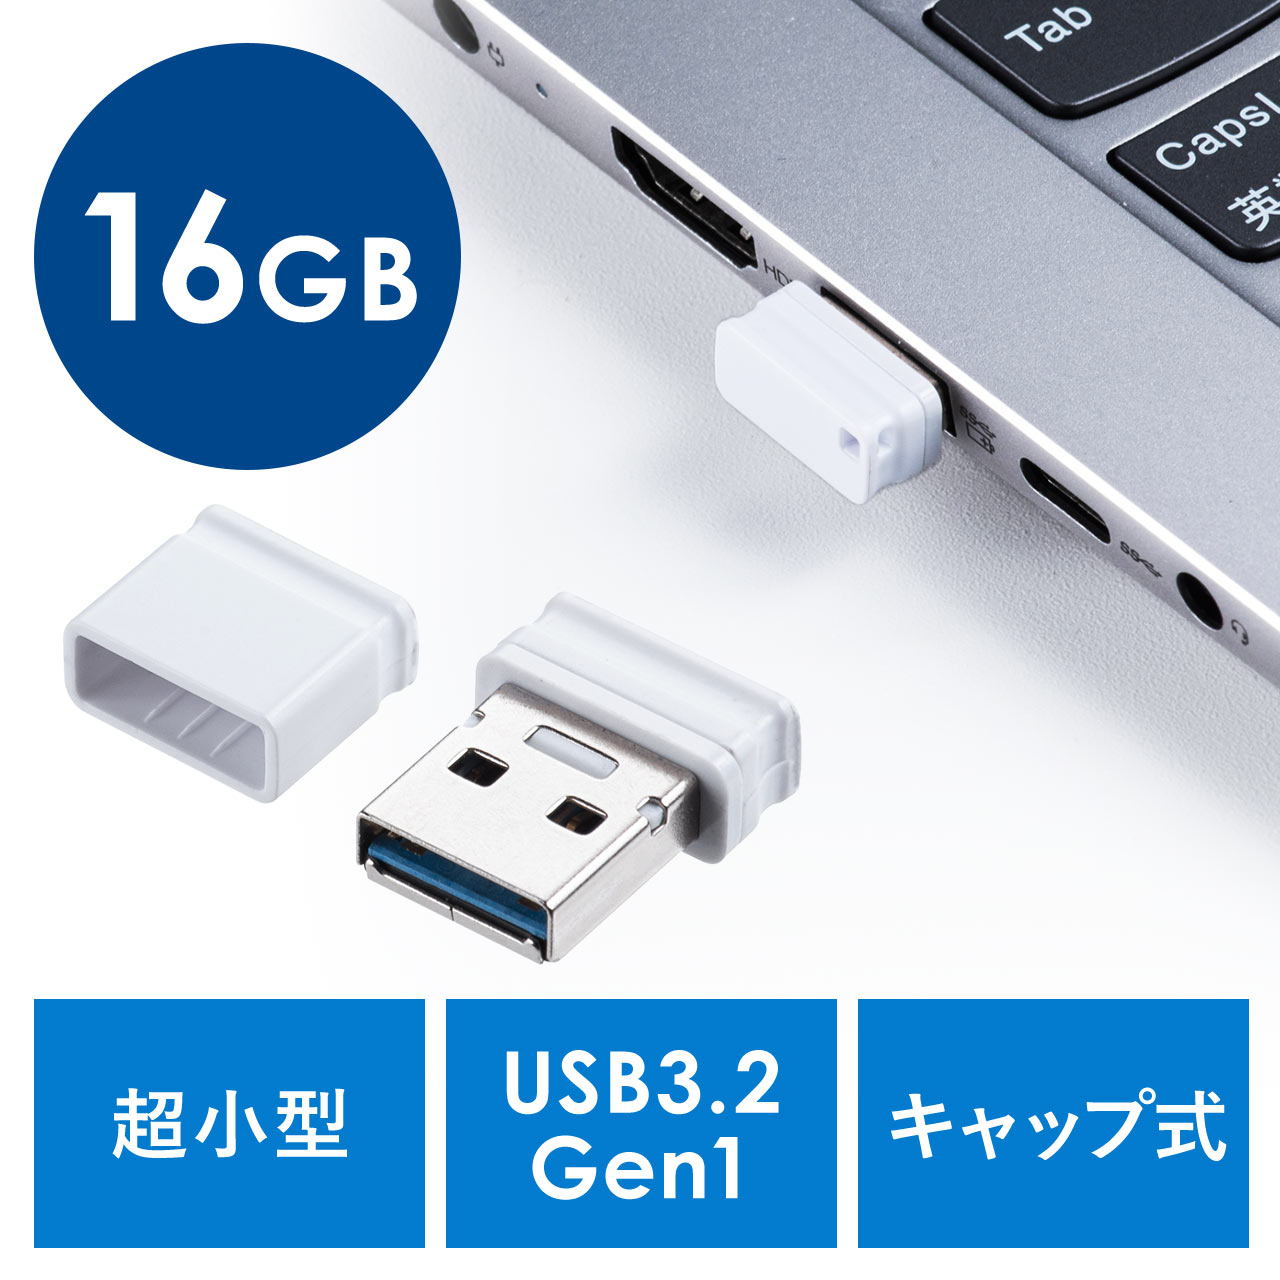 USBi^Ef[^]ELbvE16GBEUSB3.2 Gen1EzCgj 600-3UP16GW